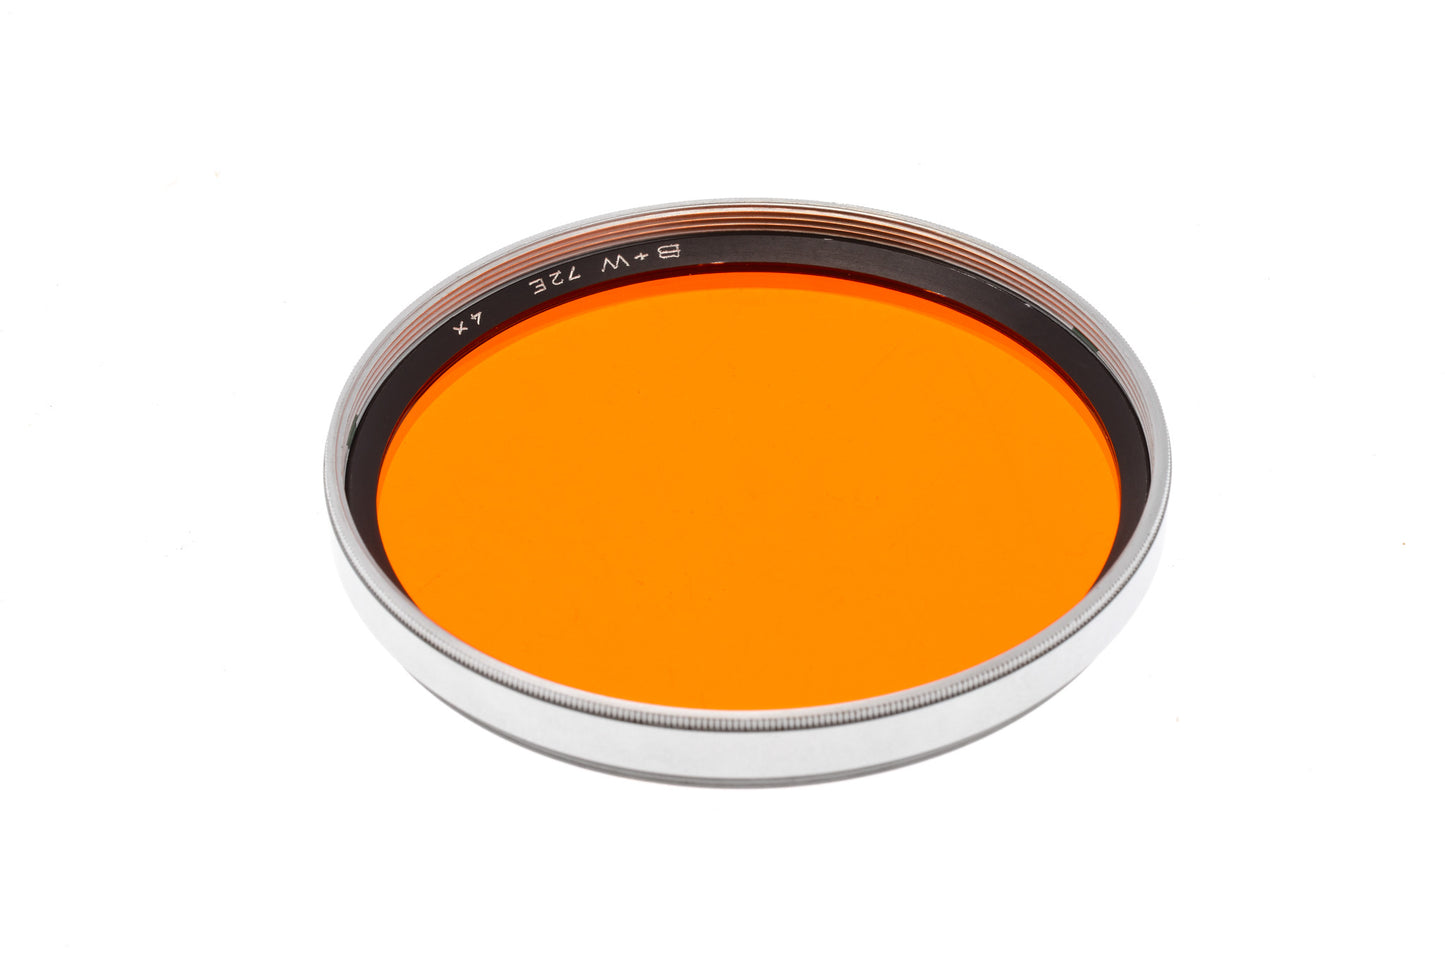 B+W 72mm Dark Orange Filter 4x - Accessory